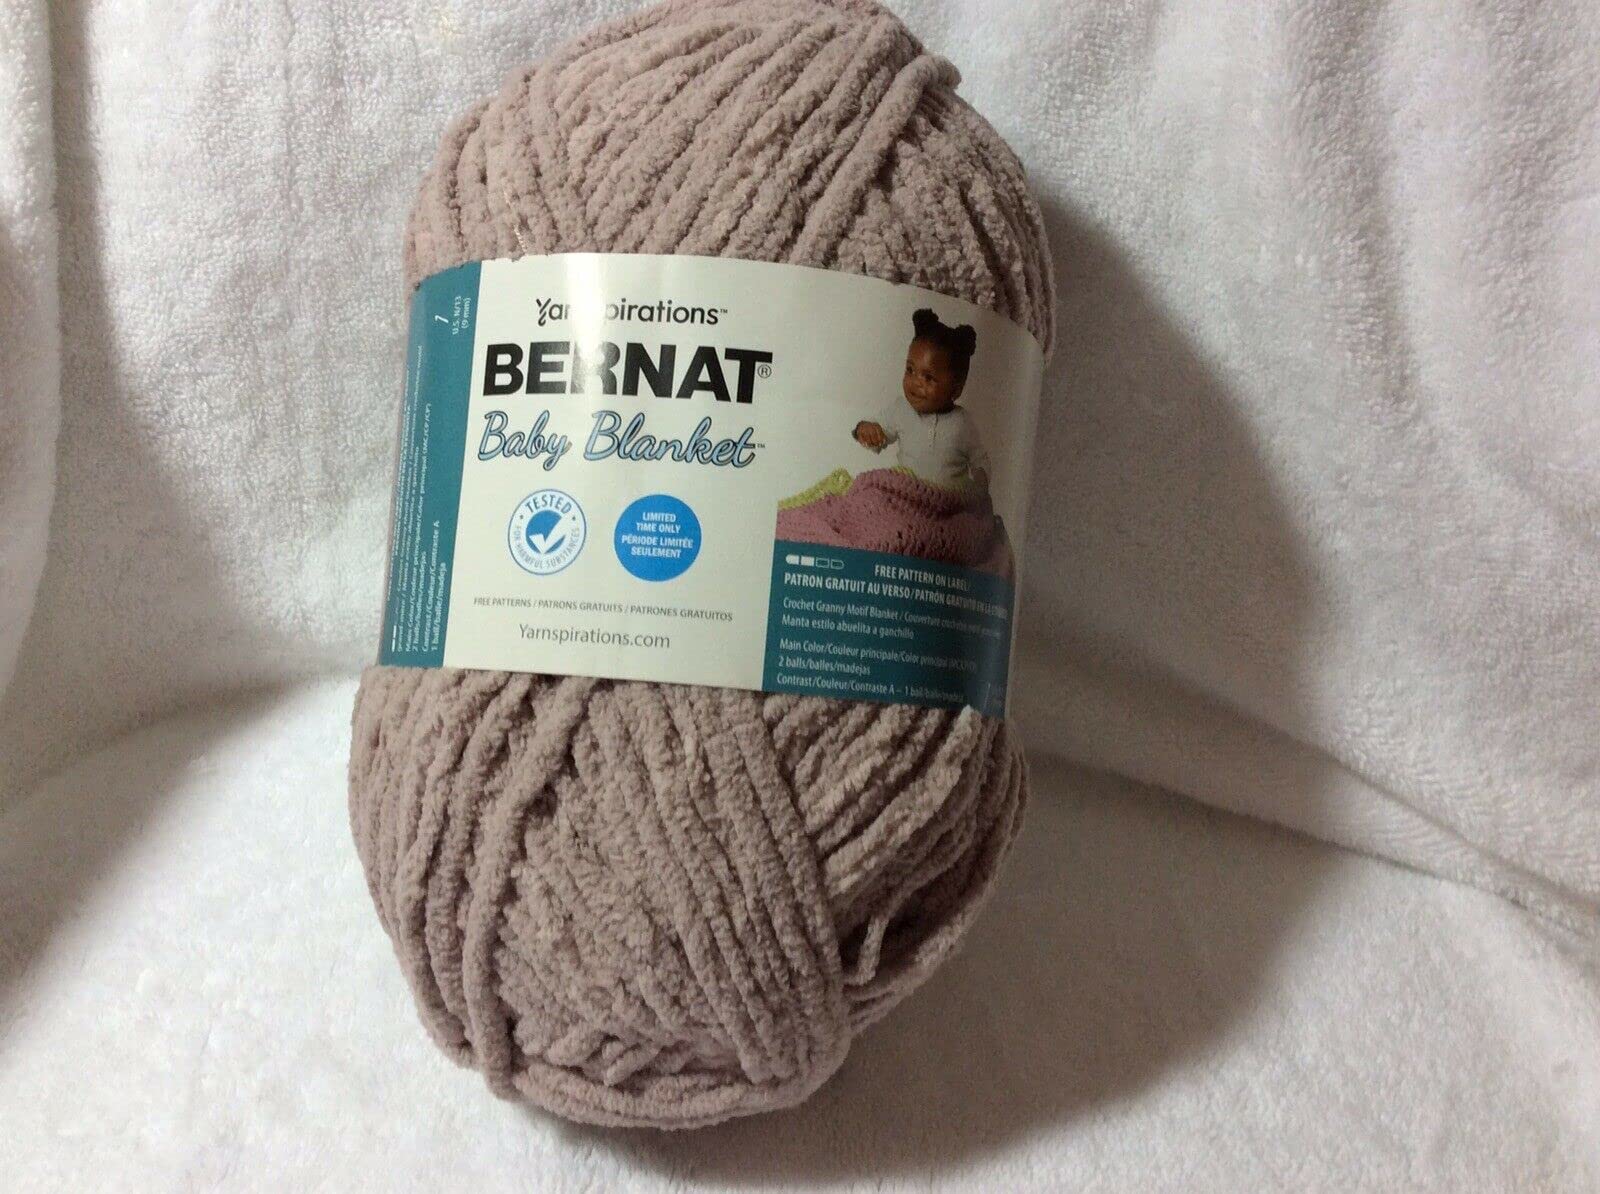 Bernat Baby Blanket Yarn - Big Ball (10.5 oz) - 2 Pack with Knitting Needle Gauge (Mushroom)